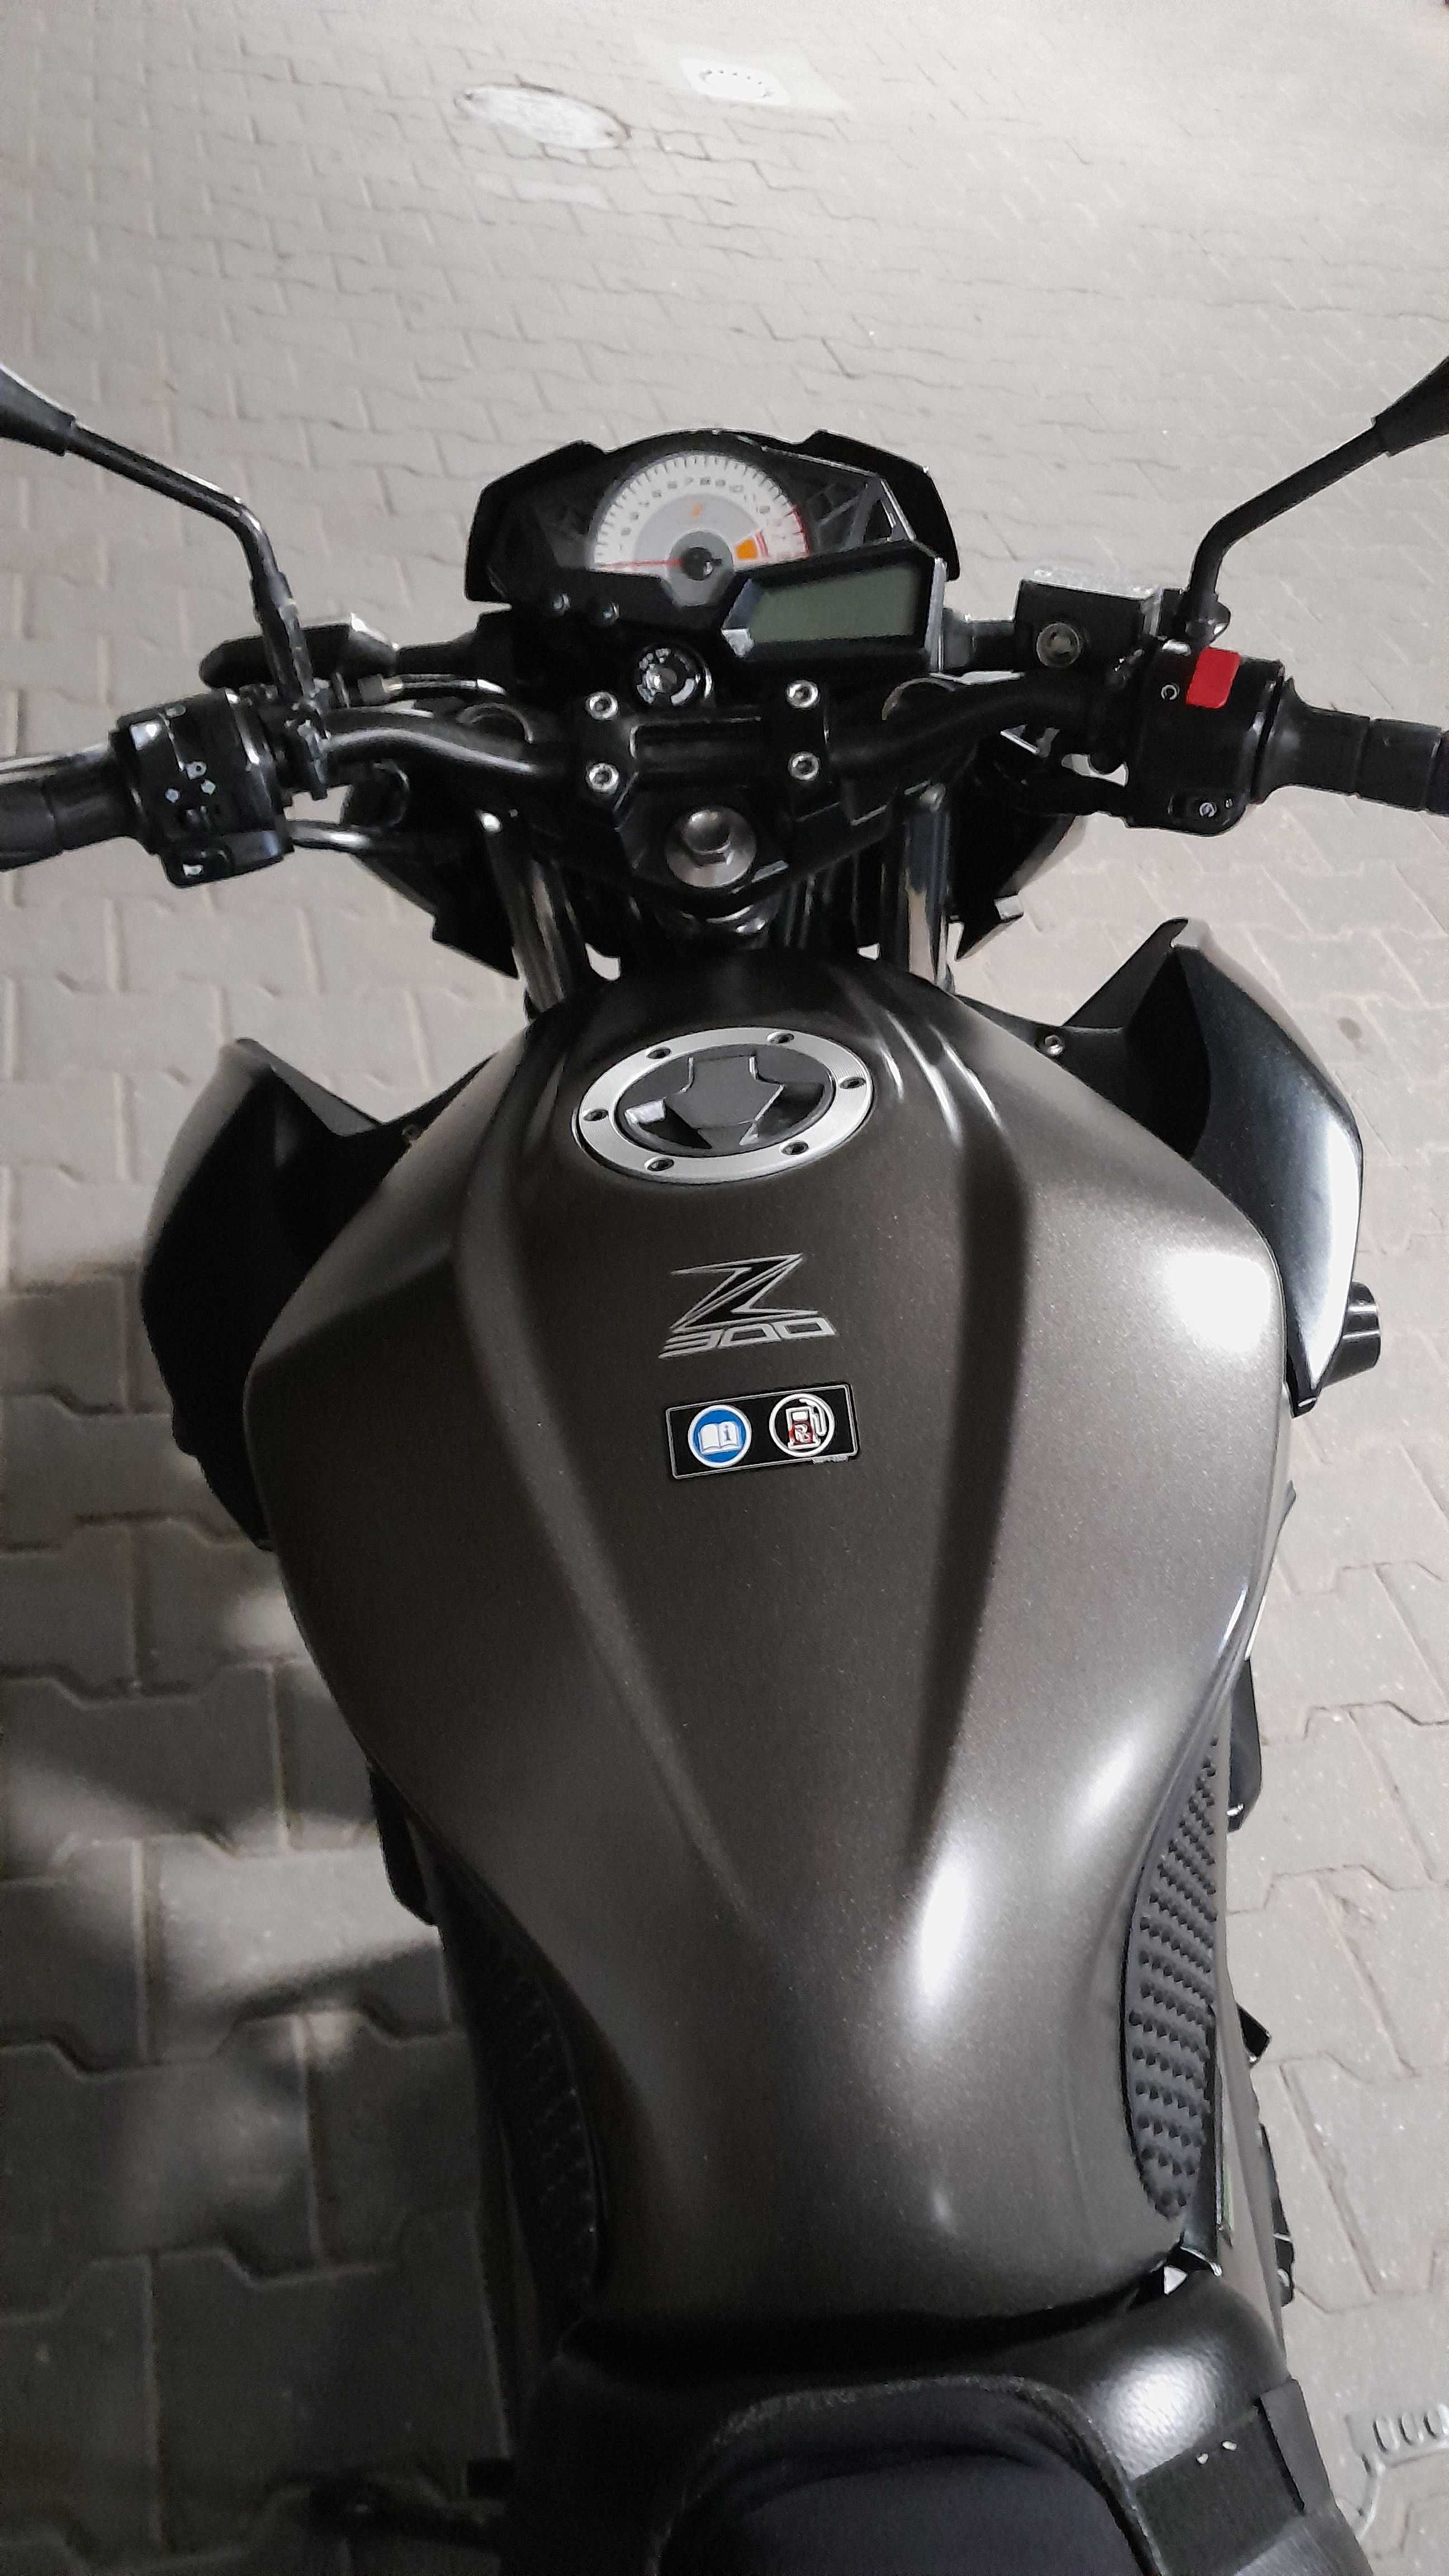 Kawasaki Z300 ABS 2015 rok. Możliwa zamiana.